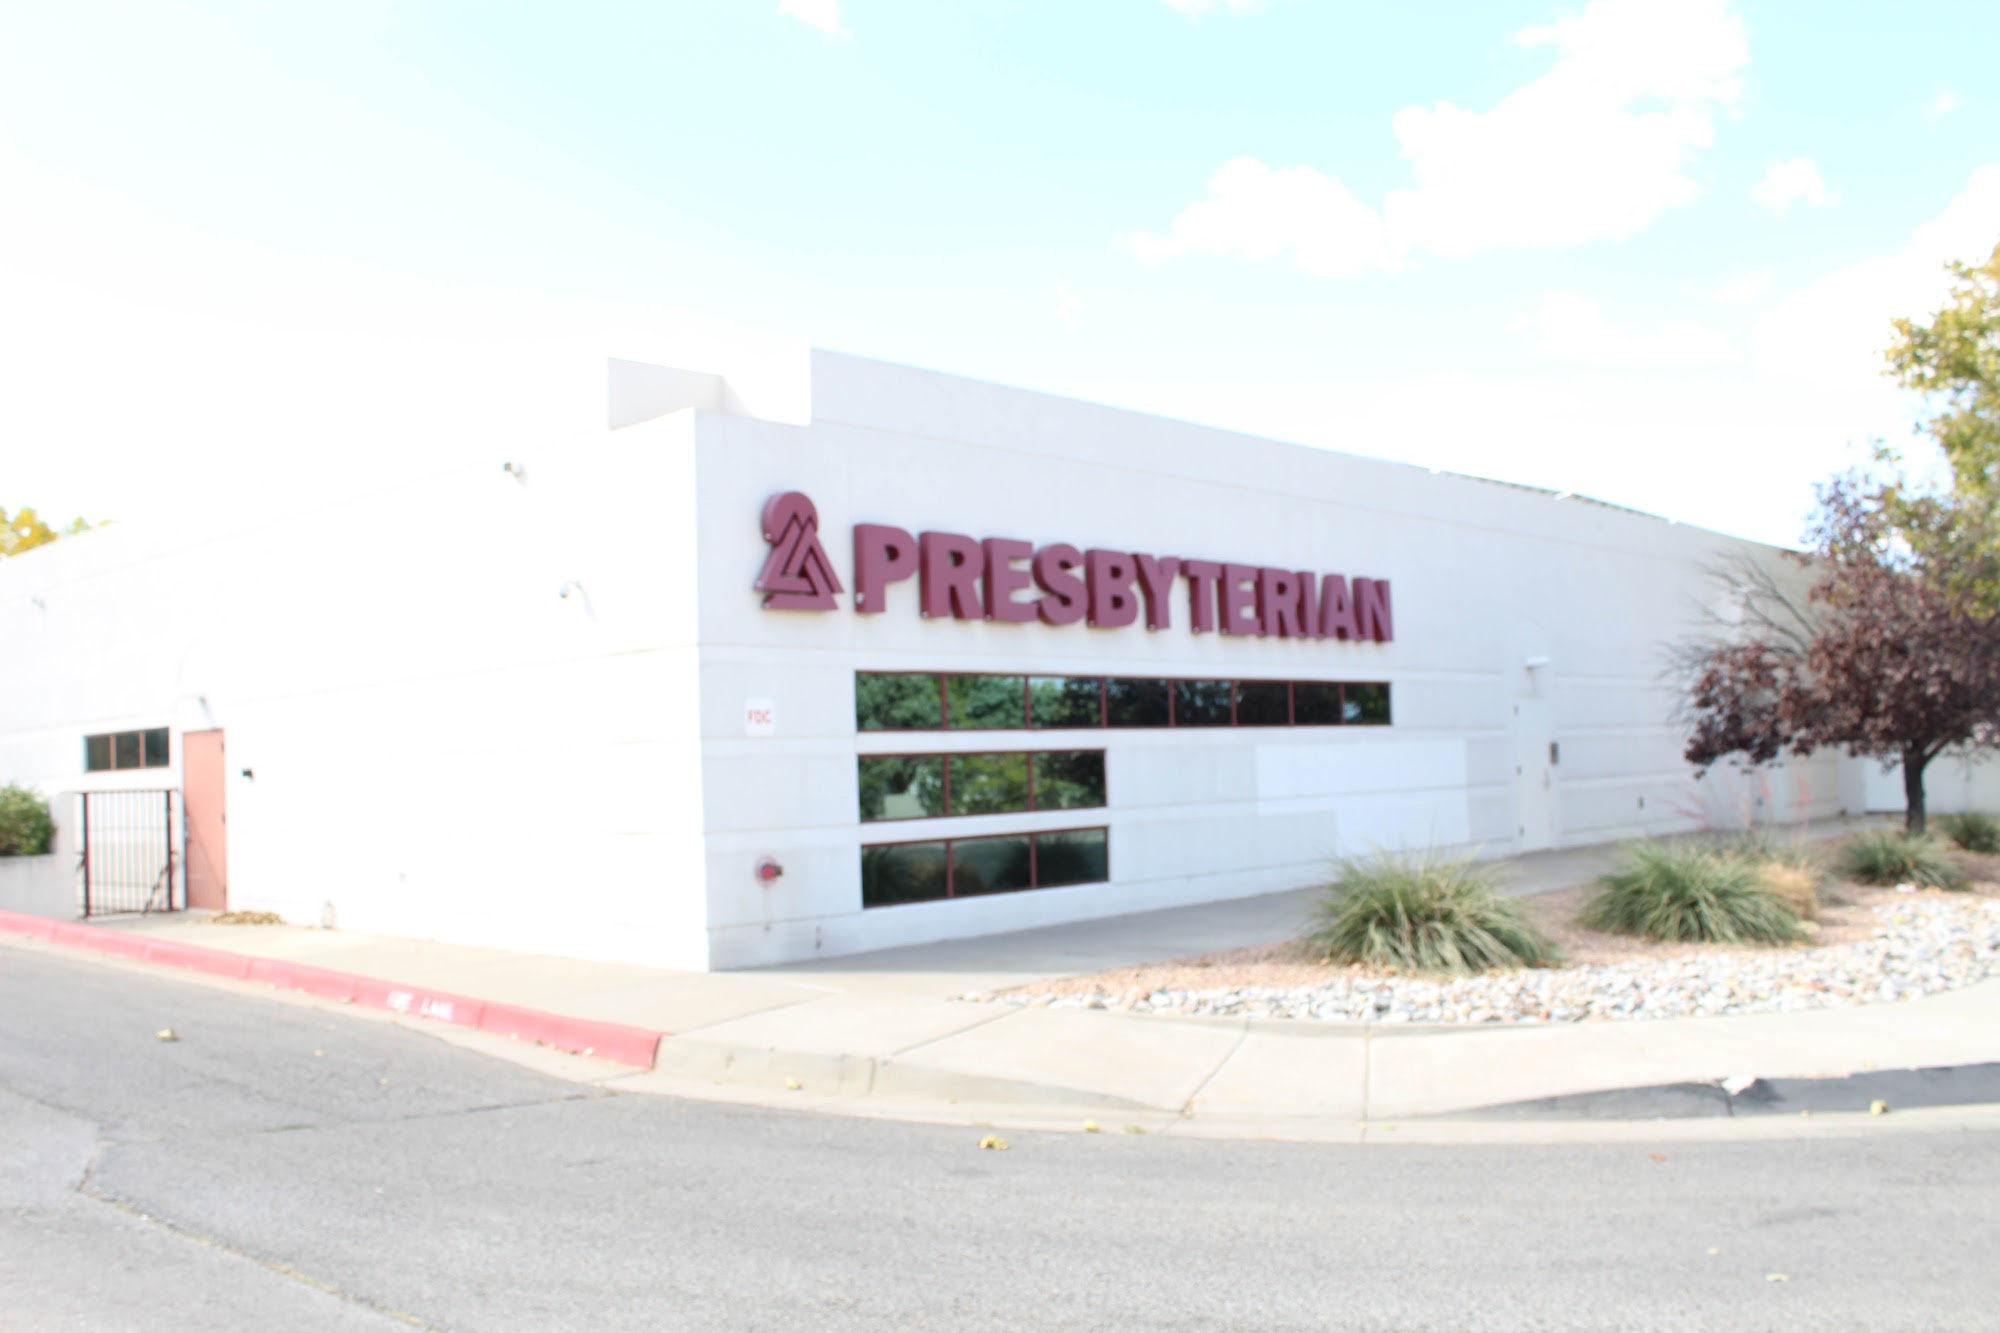 Presbyterian Anticoagulation Services in Albuquerque on Montgomery